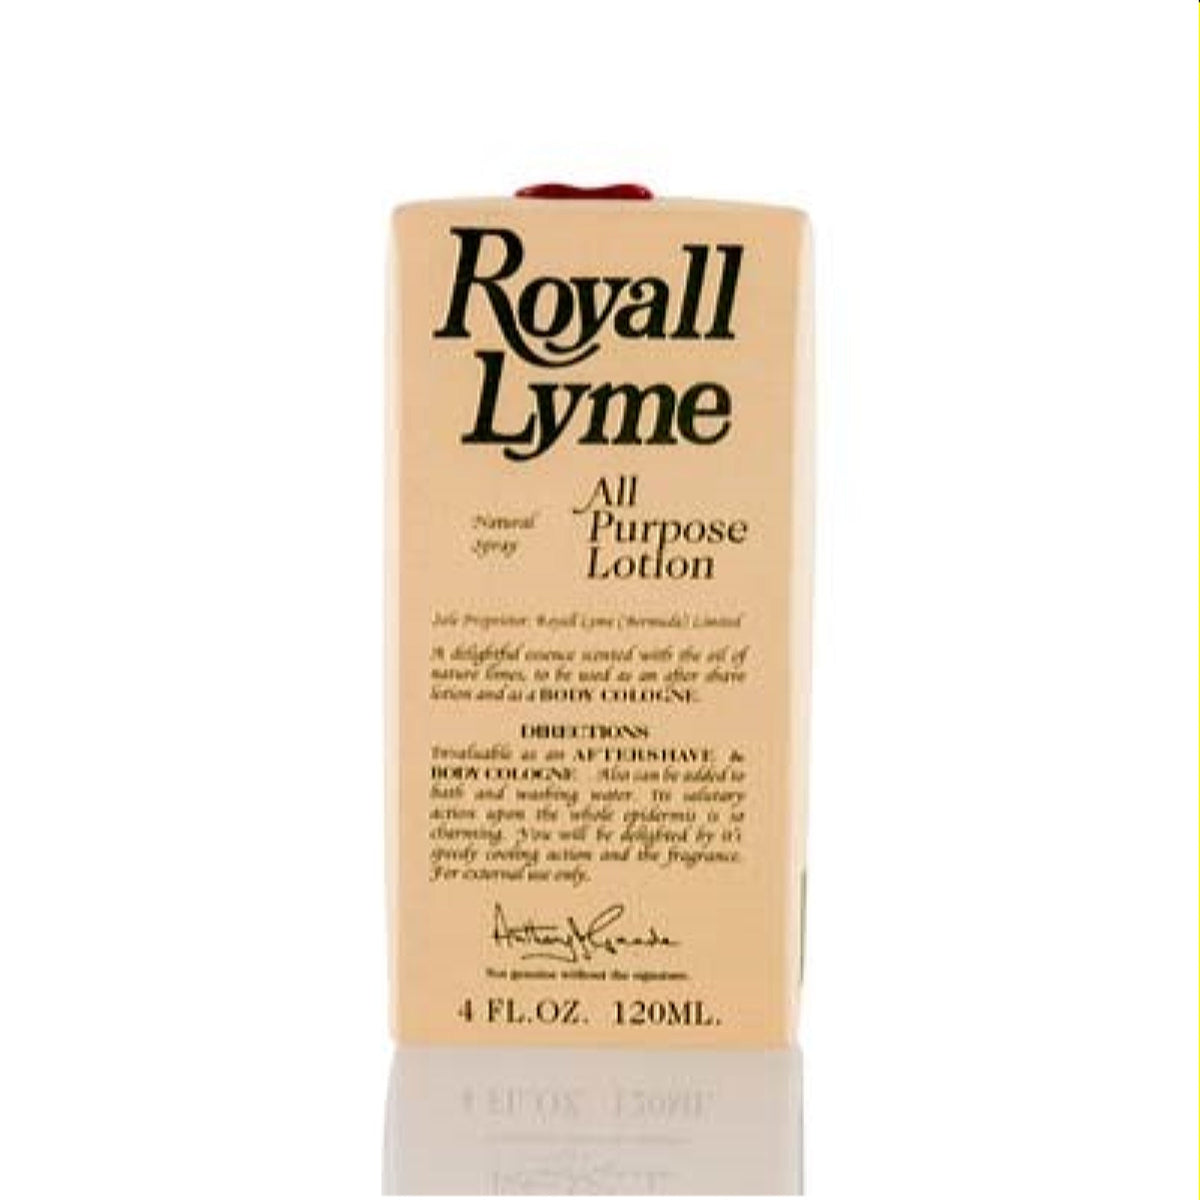 Royall Lyme Royall Fragrances All Purpose Lotion Spray 4.0 Oz For Men 00251